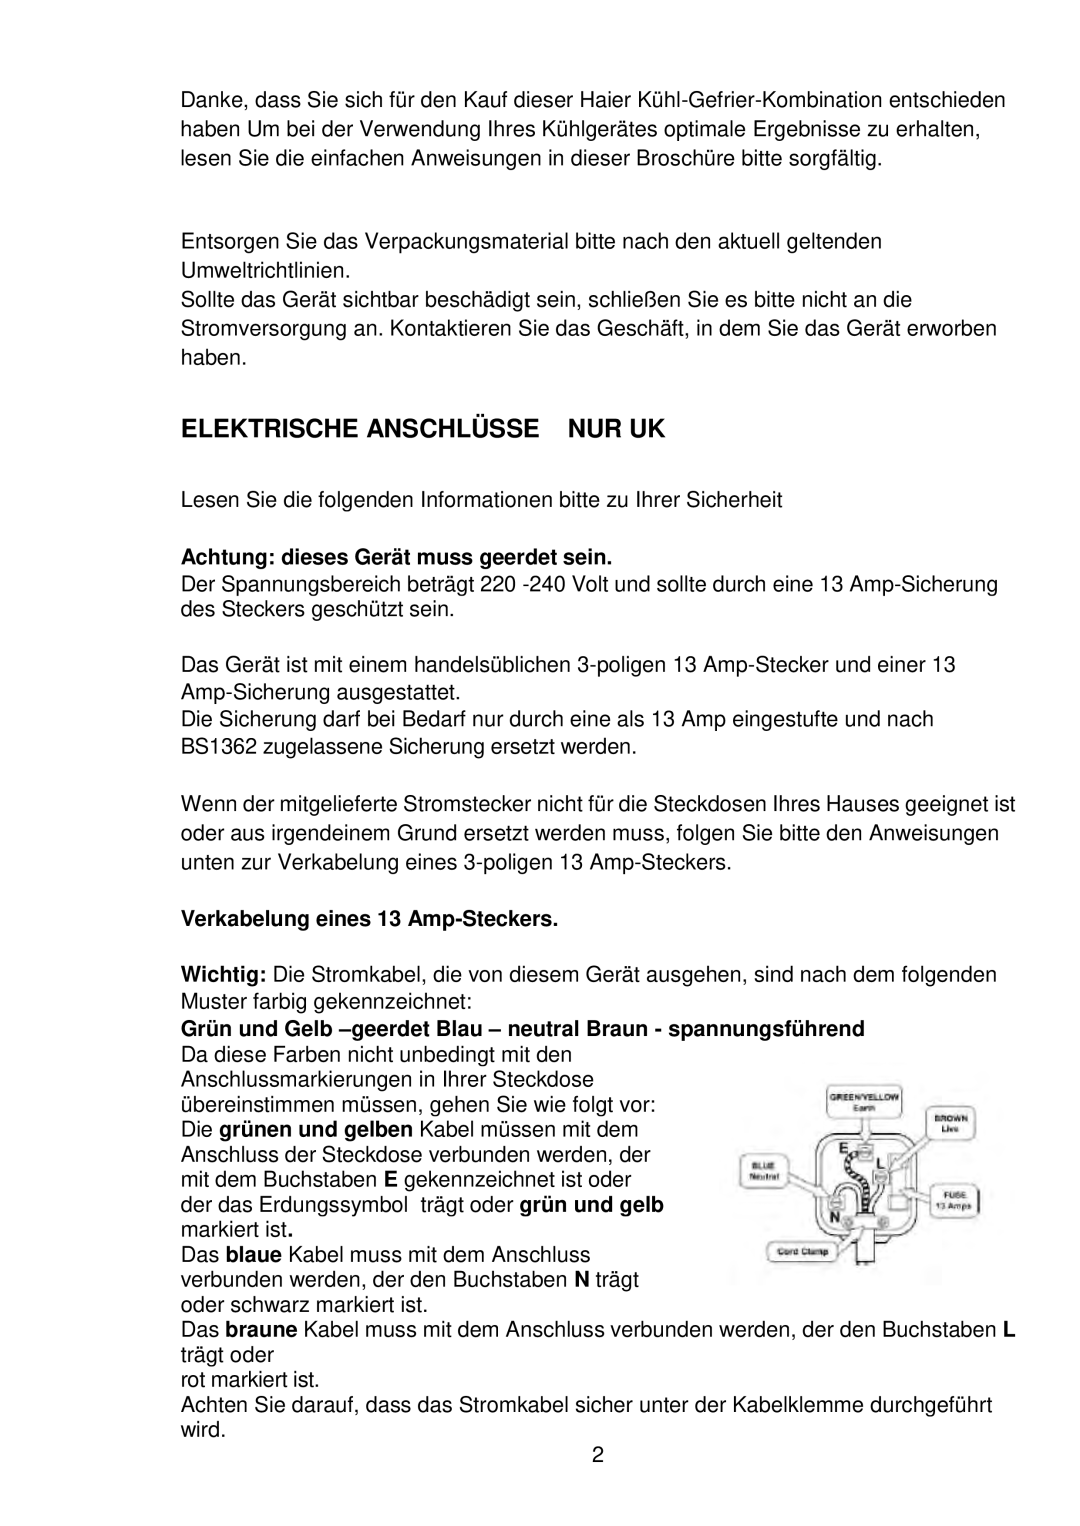 Haier HRFZ-250D AA manual Elektrische Anschlüsse Nur Uk, Achtung: dieses Gerät muss geerdet sein 